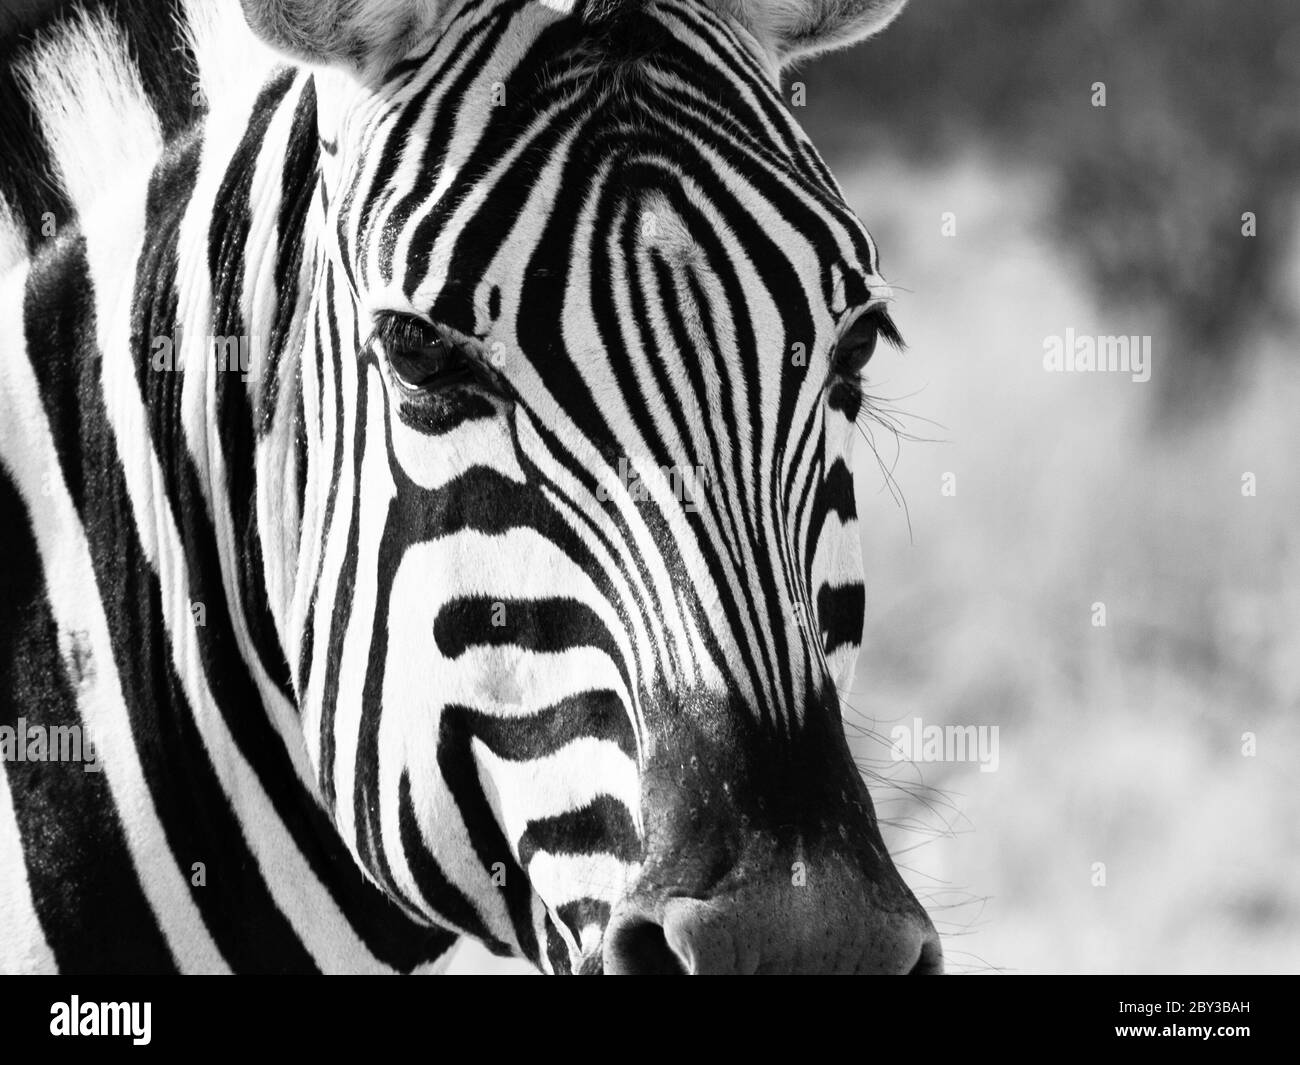 Detailed view of head of zebra, Etosha National Park, Namibia. Black and white image. Stock Photo